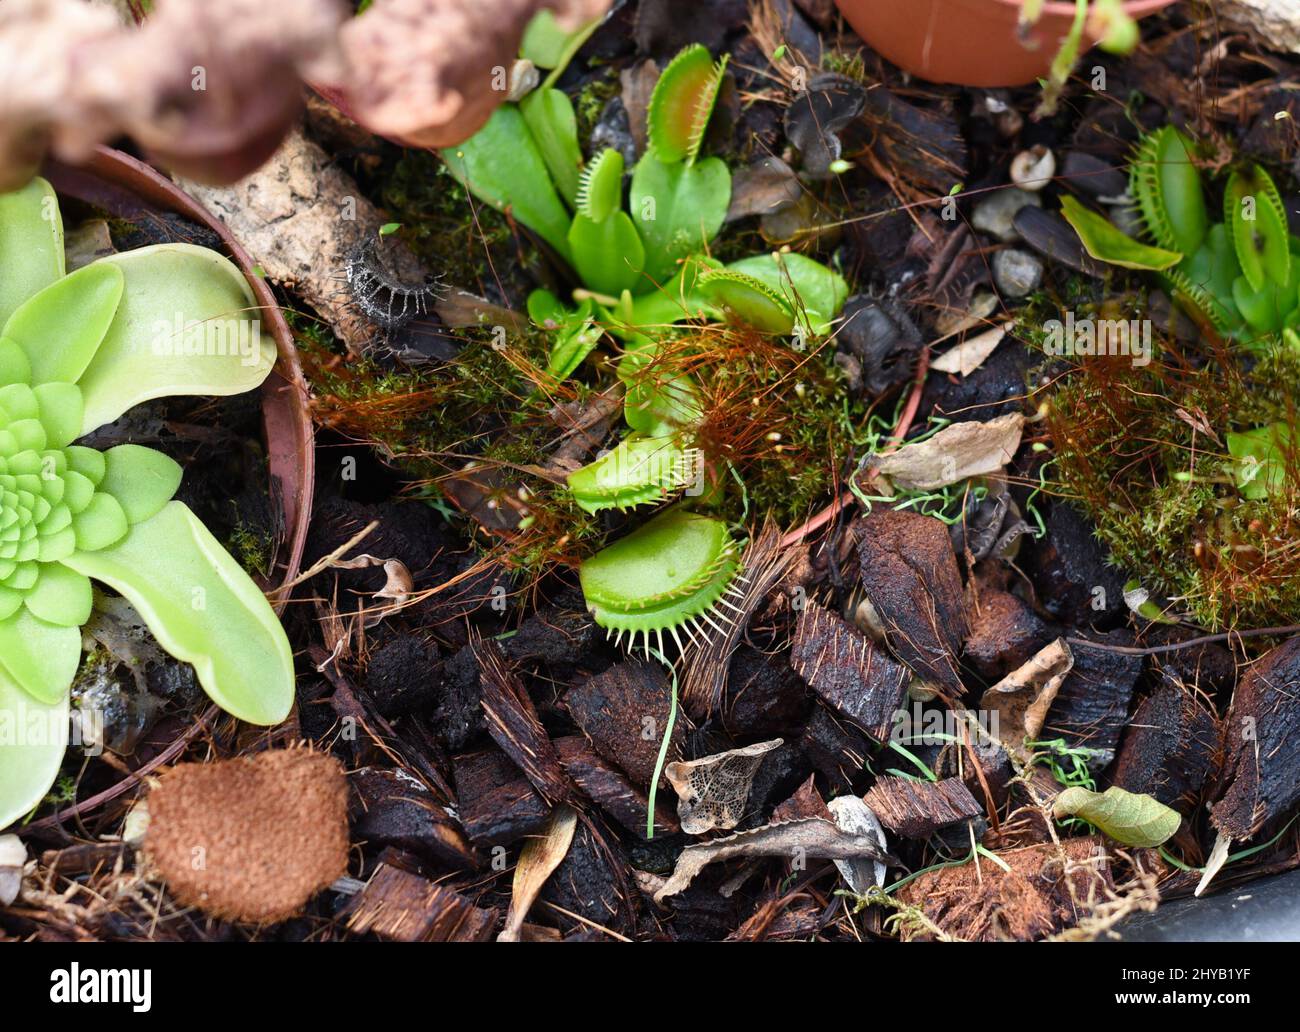 Venus flytrap (Dionaea muscipula) close up Stock Photo